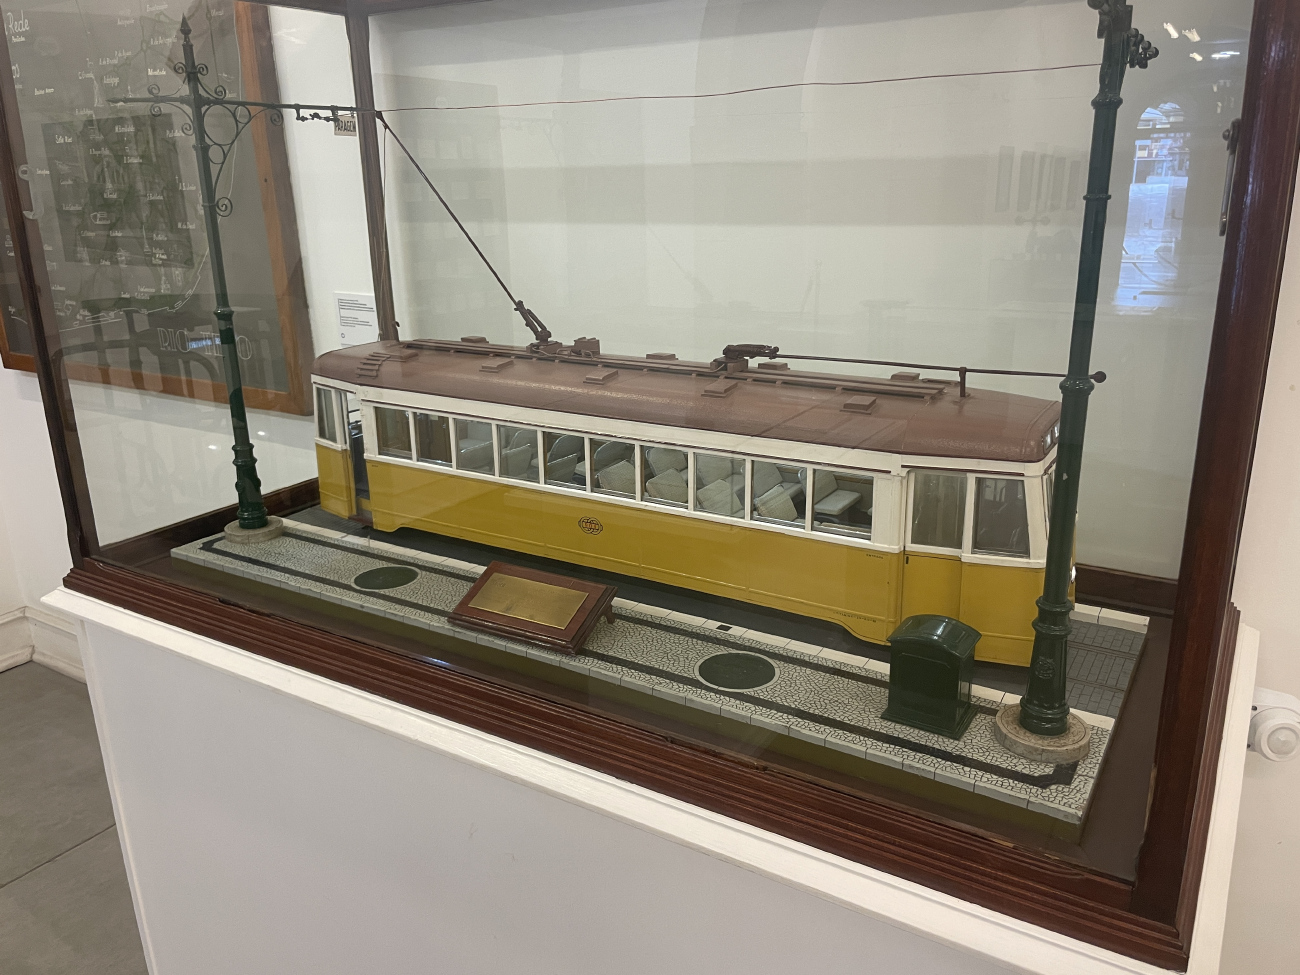 Modelling; Lisbon — Tram — Museu da Carris